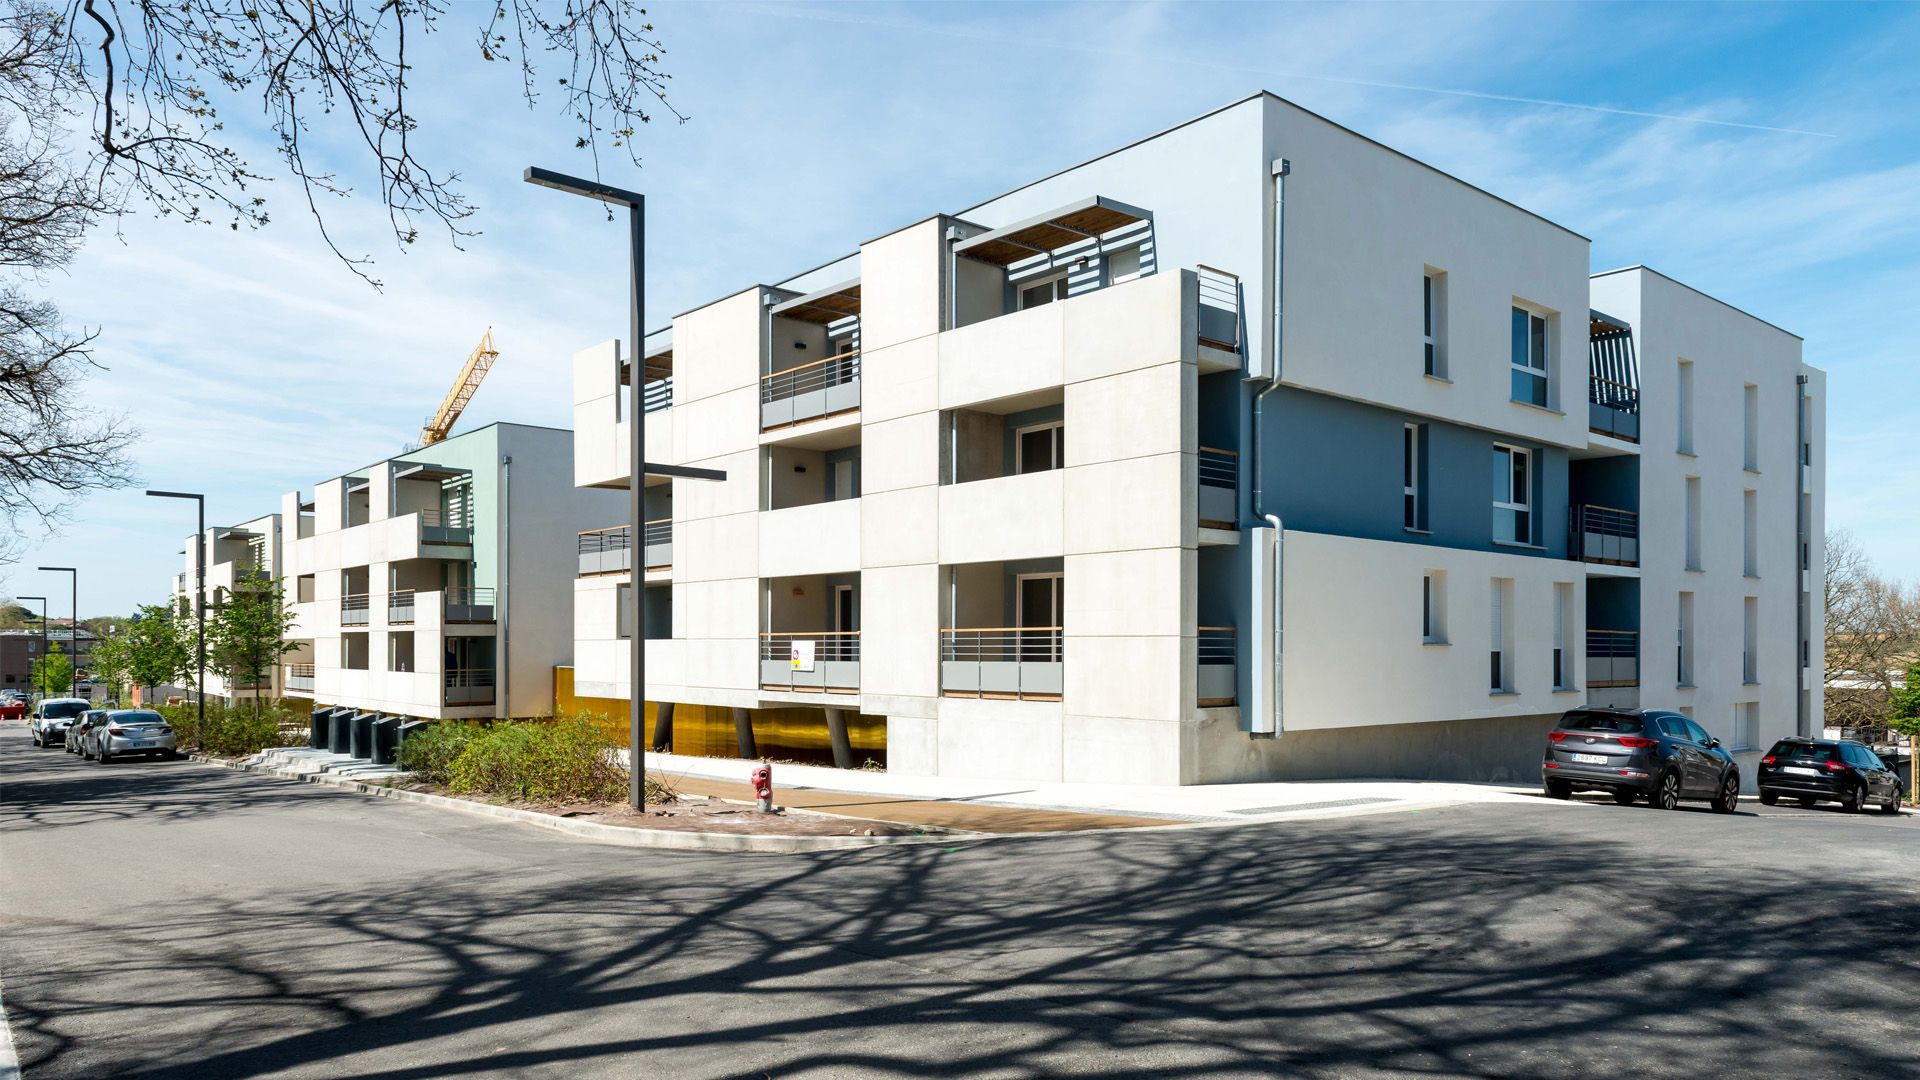 Seuil-architecture-residence-senior-zac-tucard-saint-orens-slid